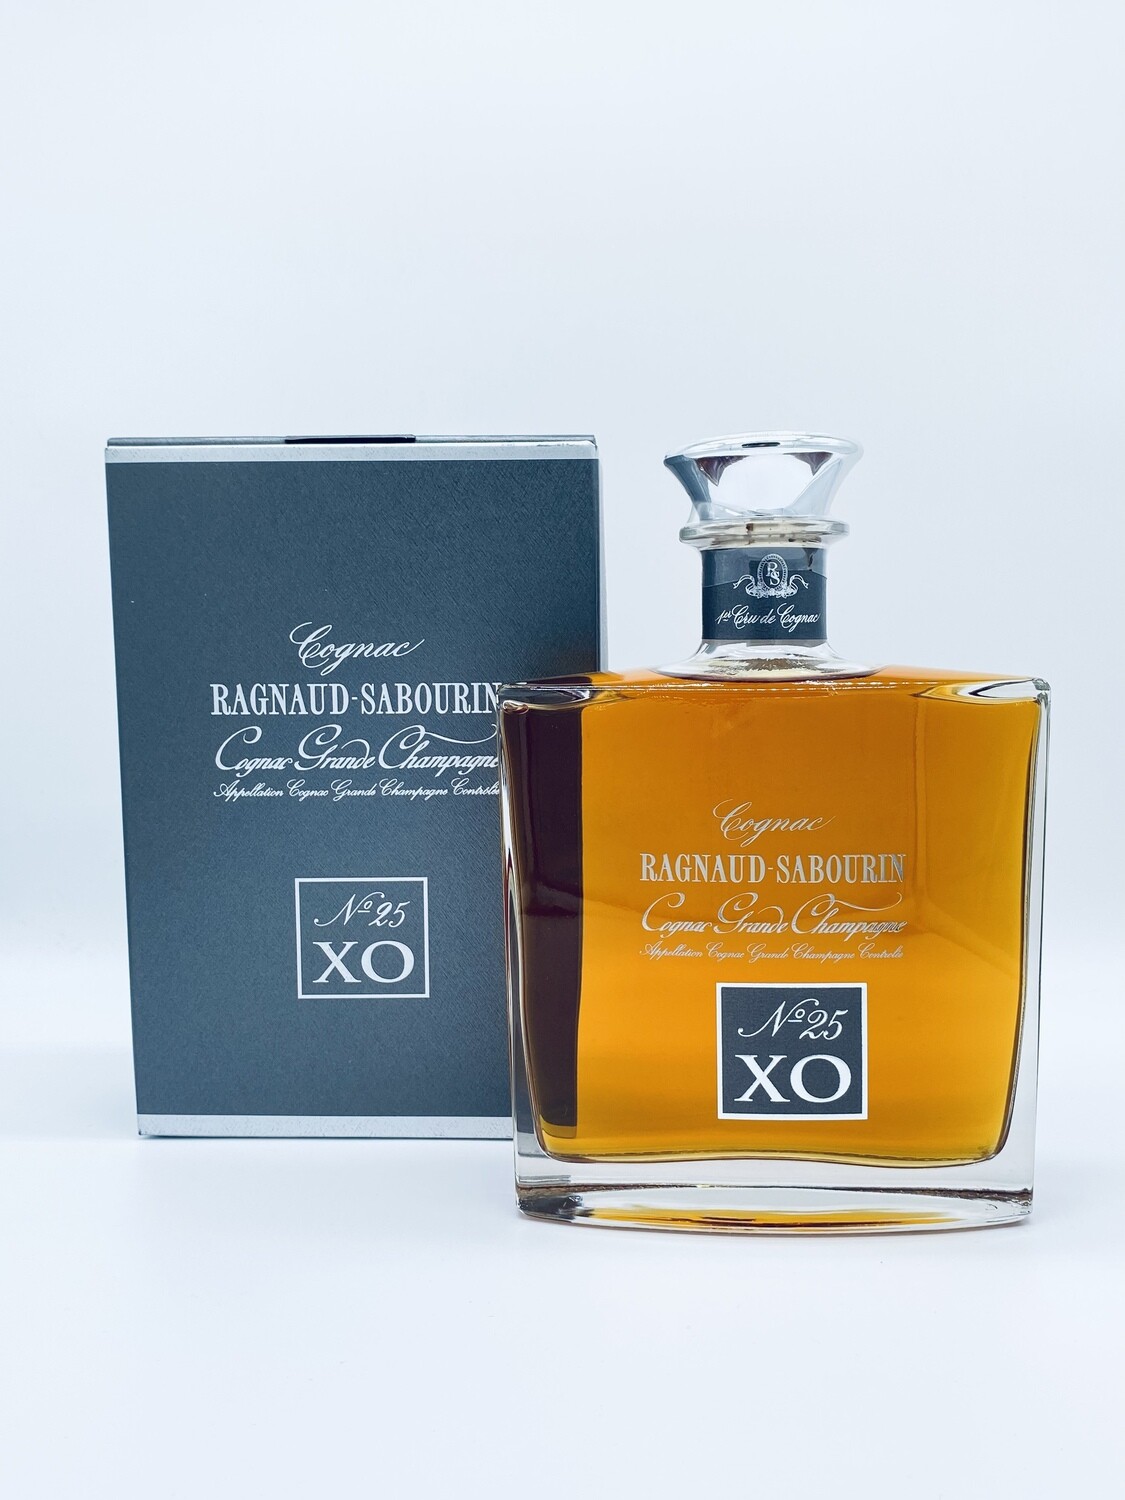 Cognac Ragnaud-Sabourin XO